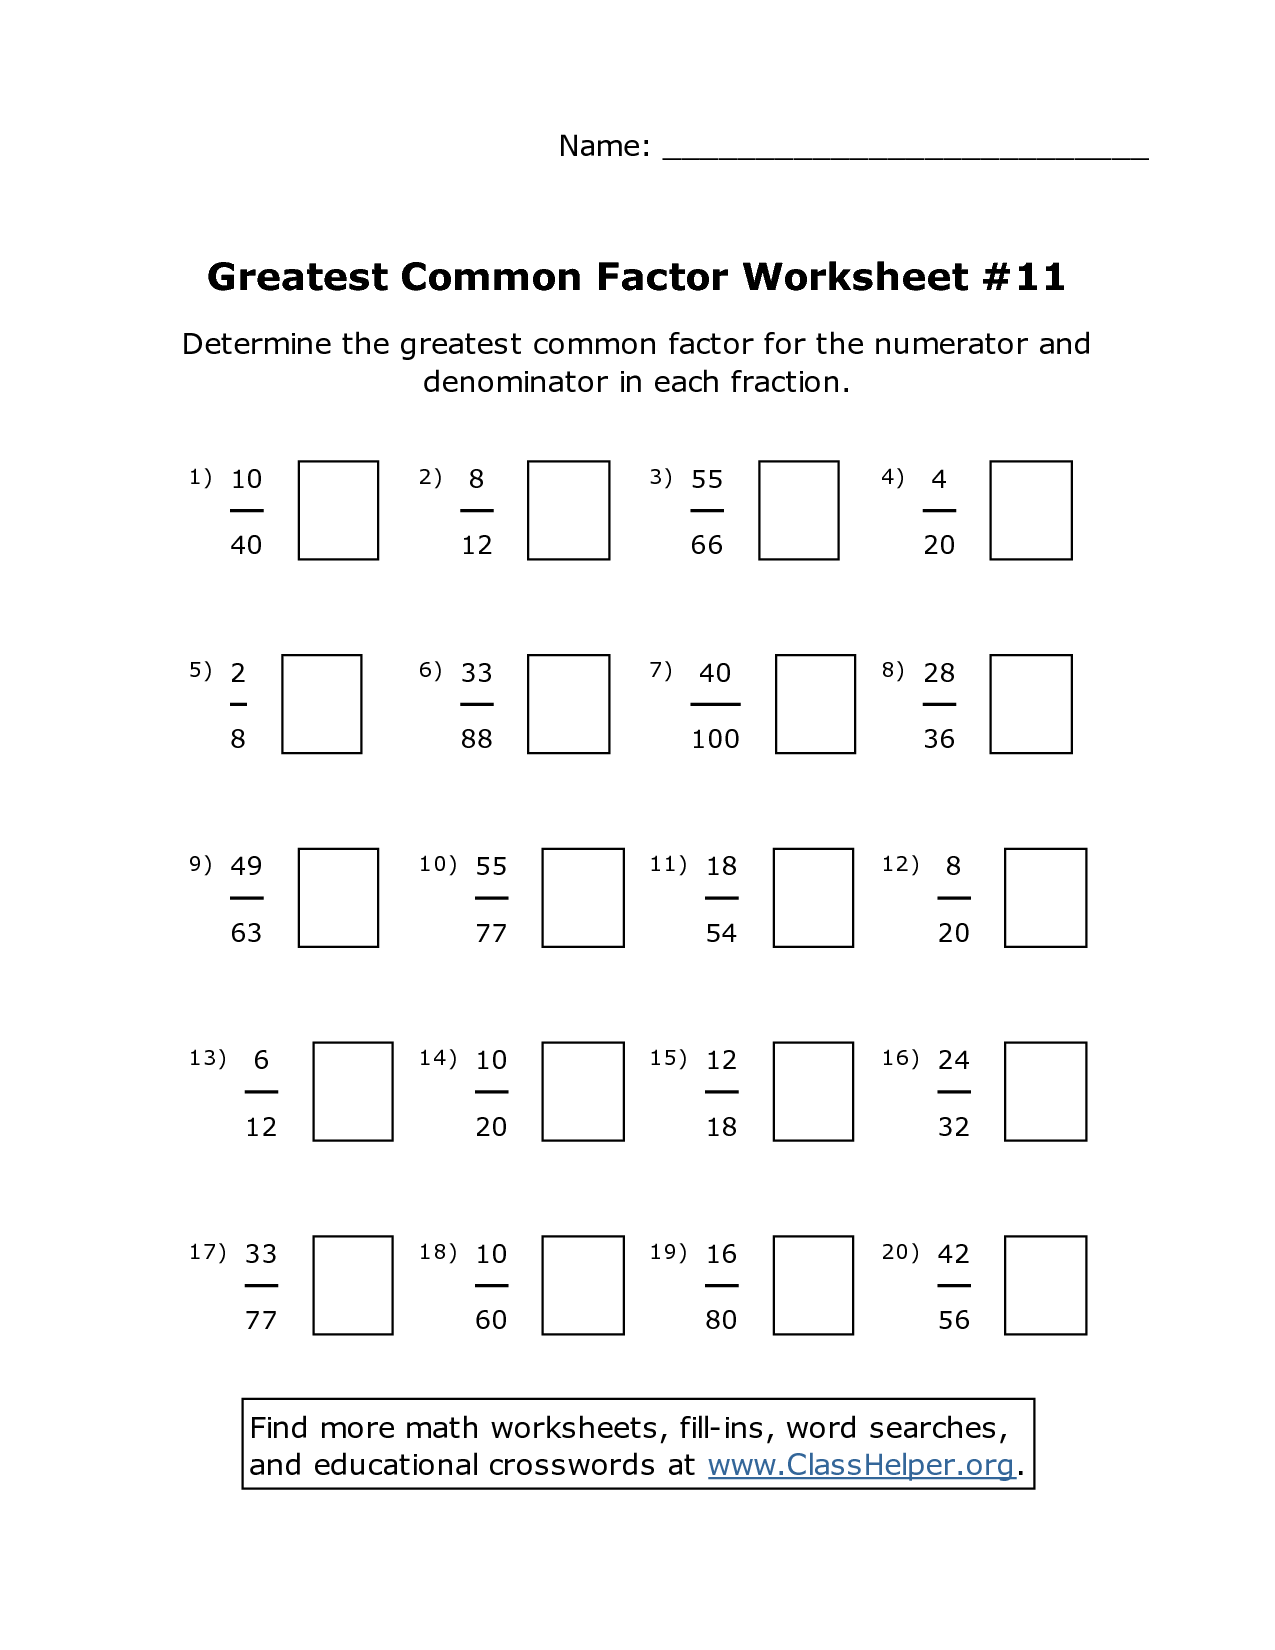 factoring-greatest-common-factor-worksheet